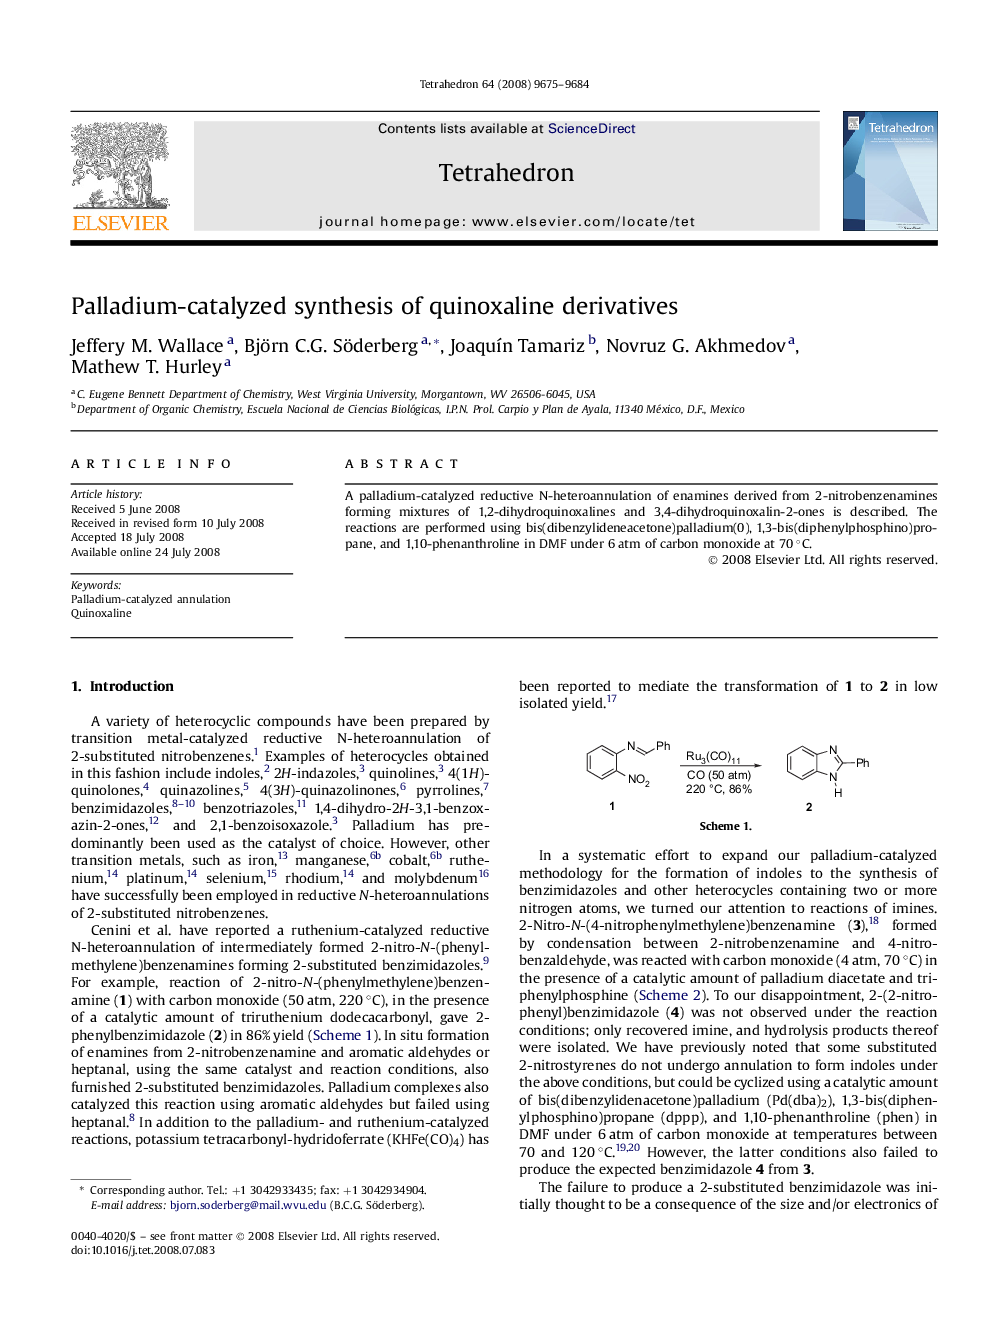 Palladium-catalyzed synthesis of quinoxaline derivatives